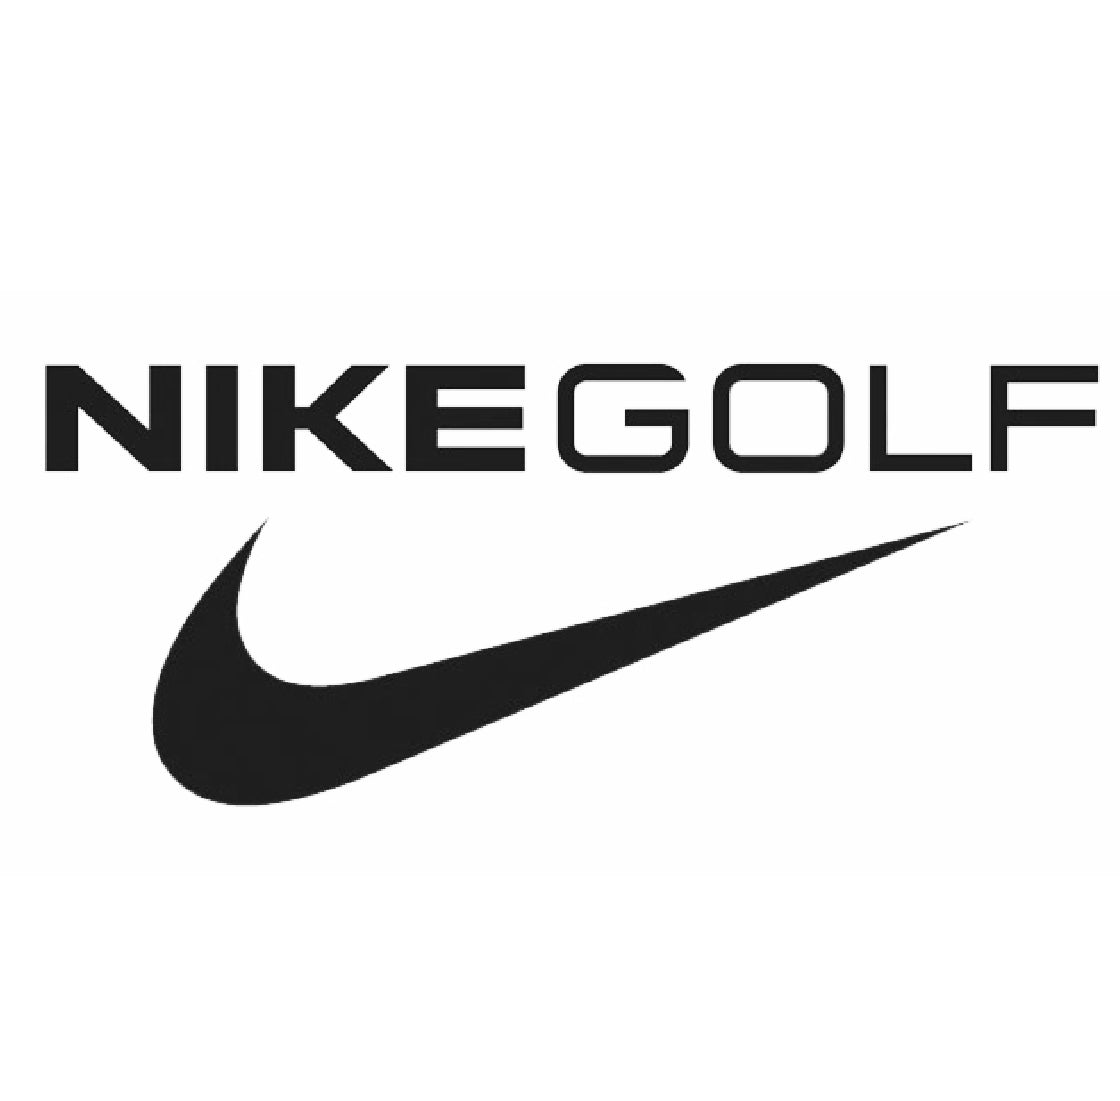 Nike Golf Endorsement Logo